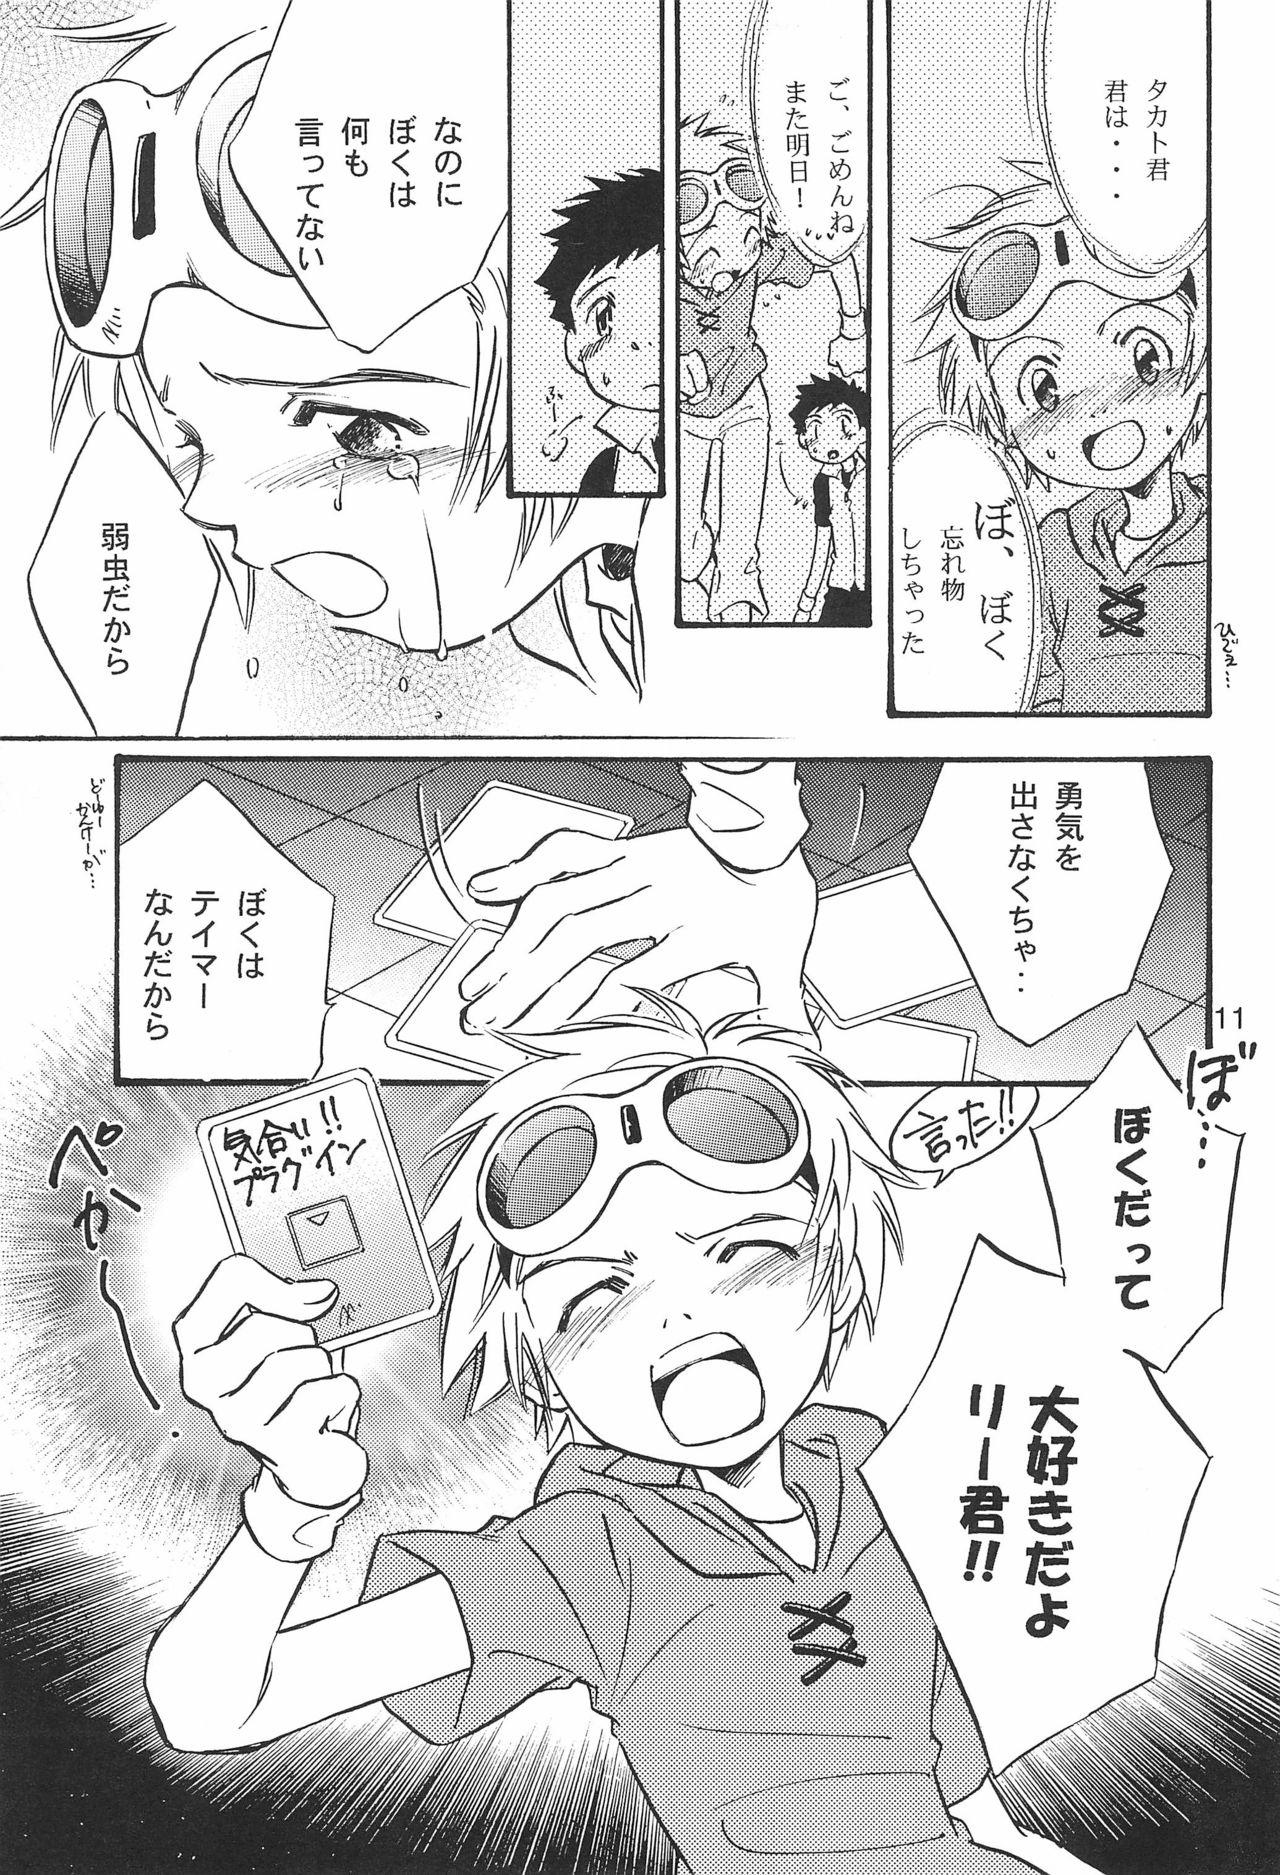 Nalgas WILD CUBE - Digimon tamers Sweet - Page 11